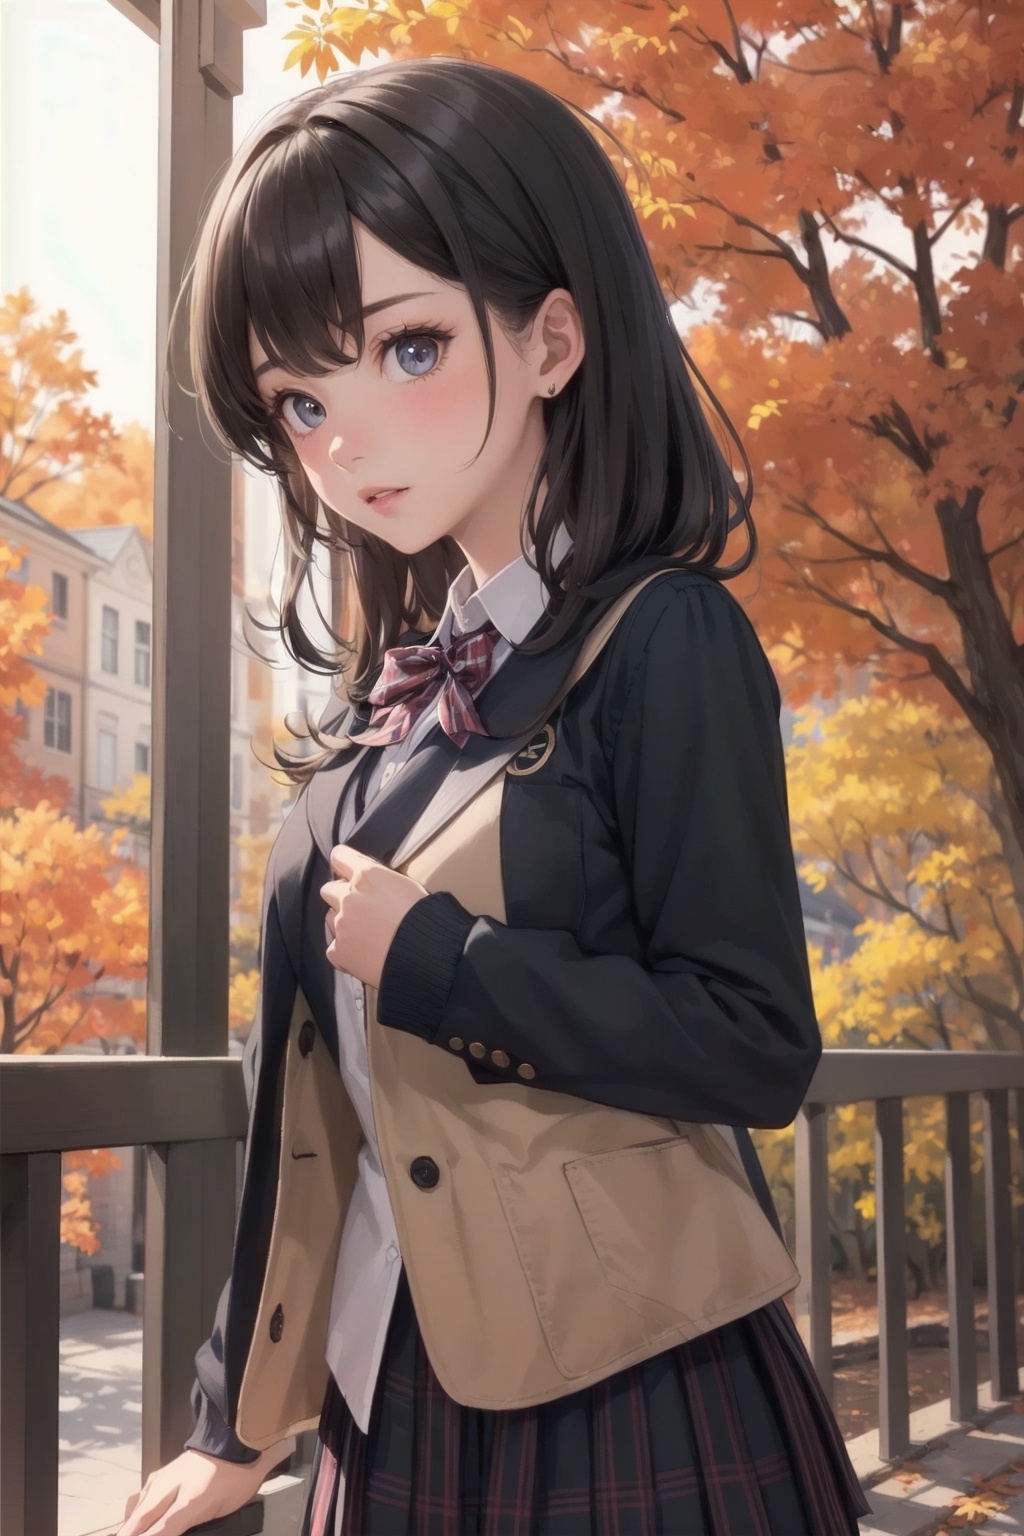 Anime background_Autumn scenery_002 - Stock Illustration [105255488] - PIXTA